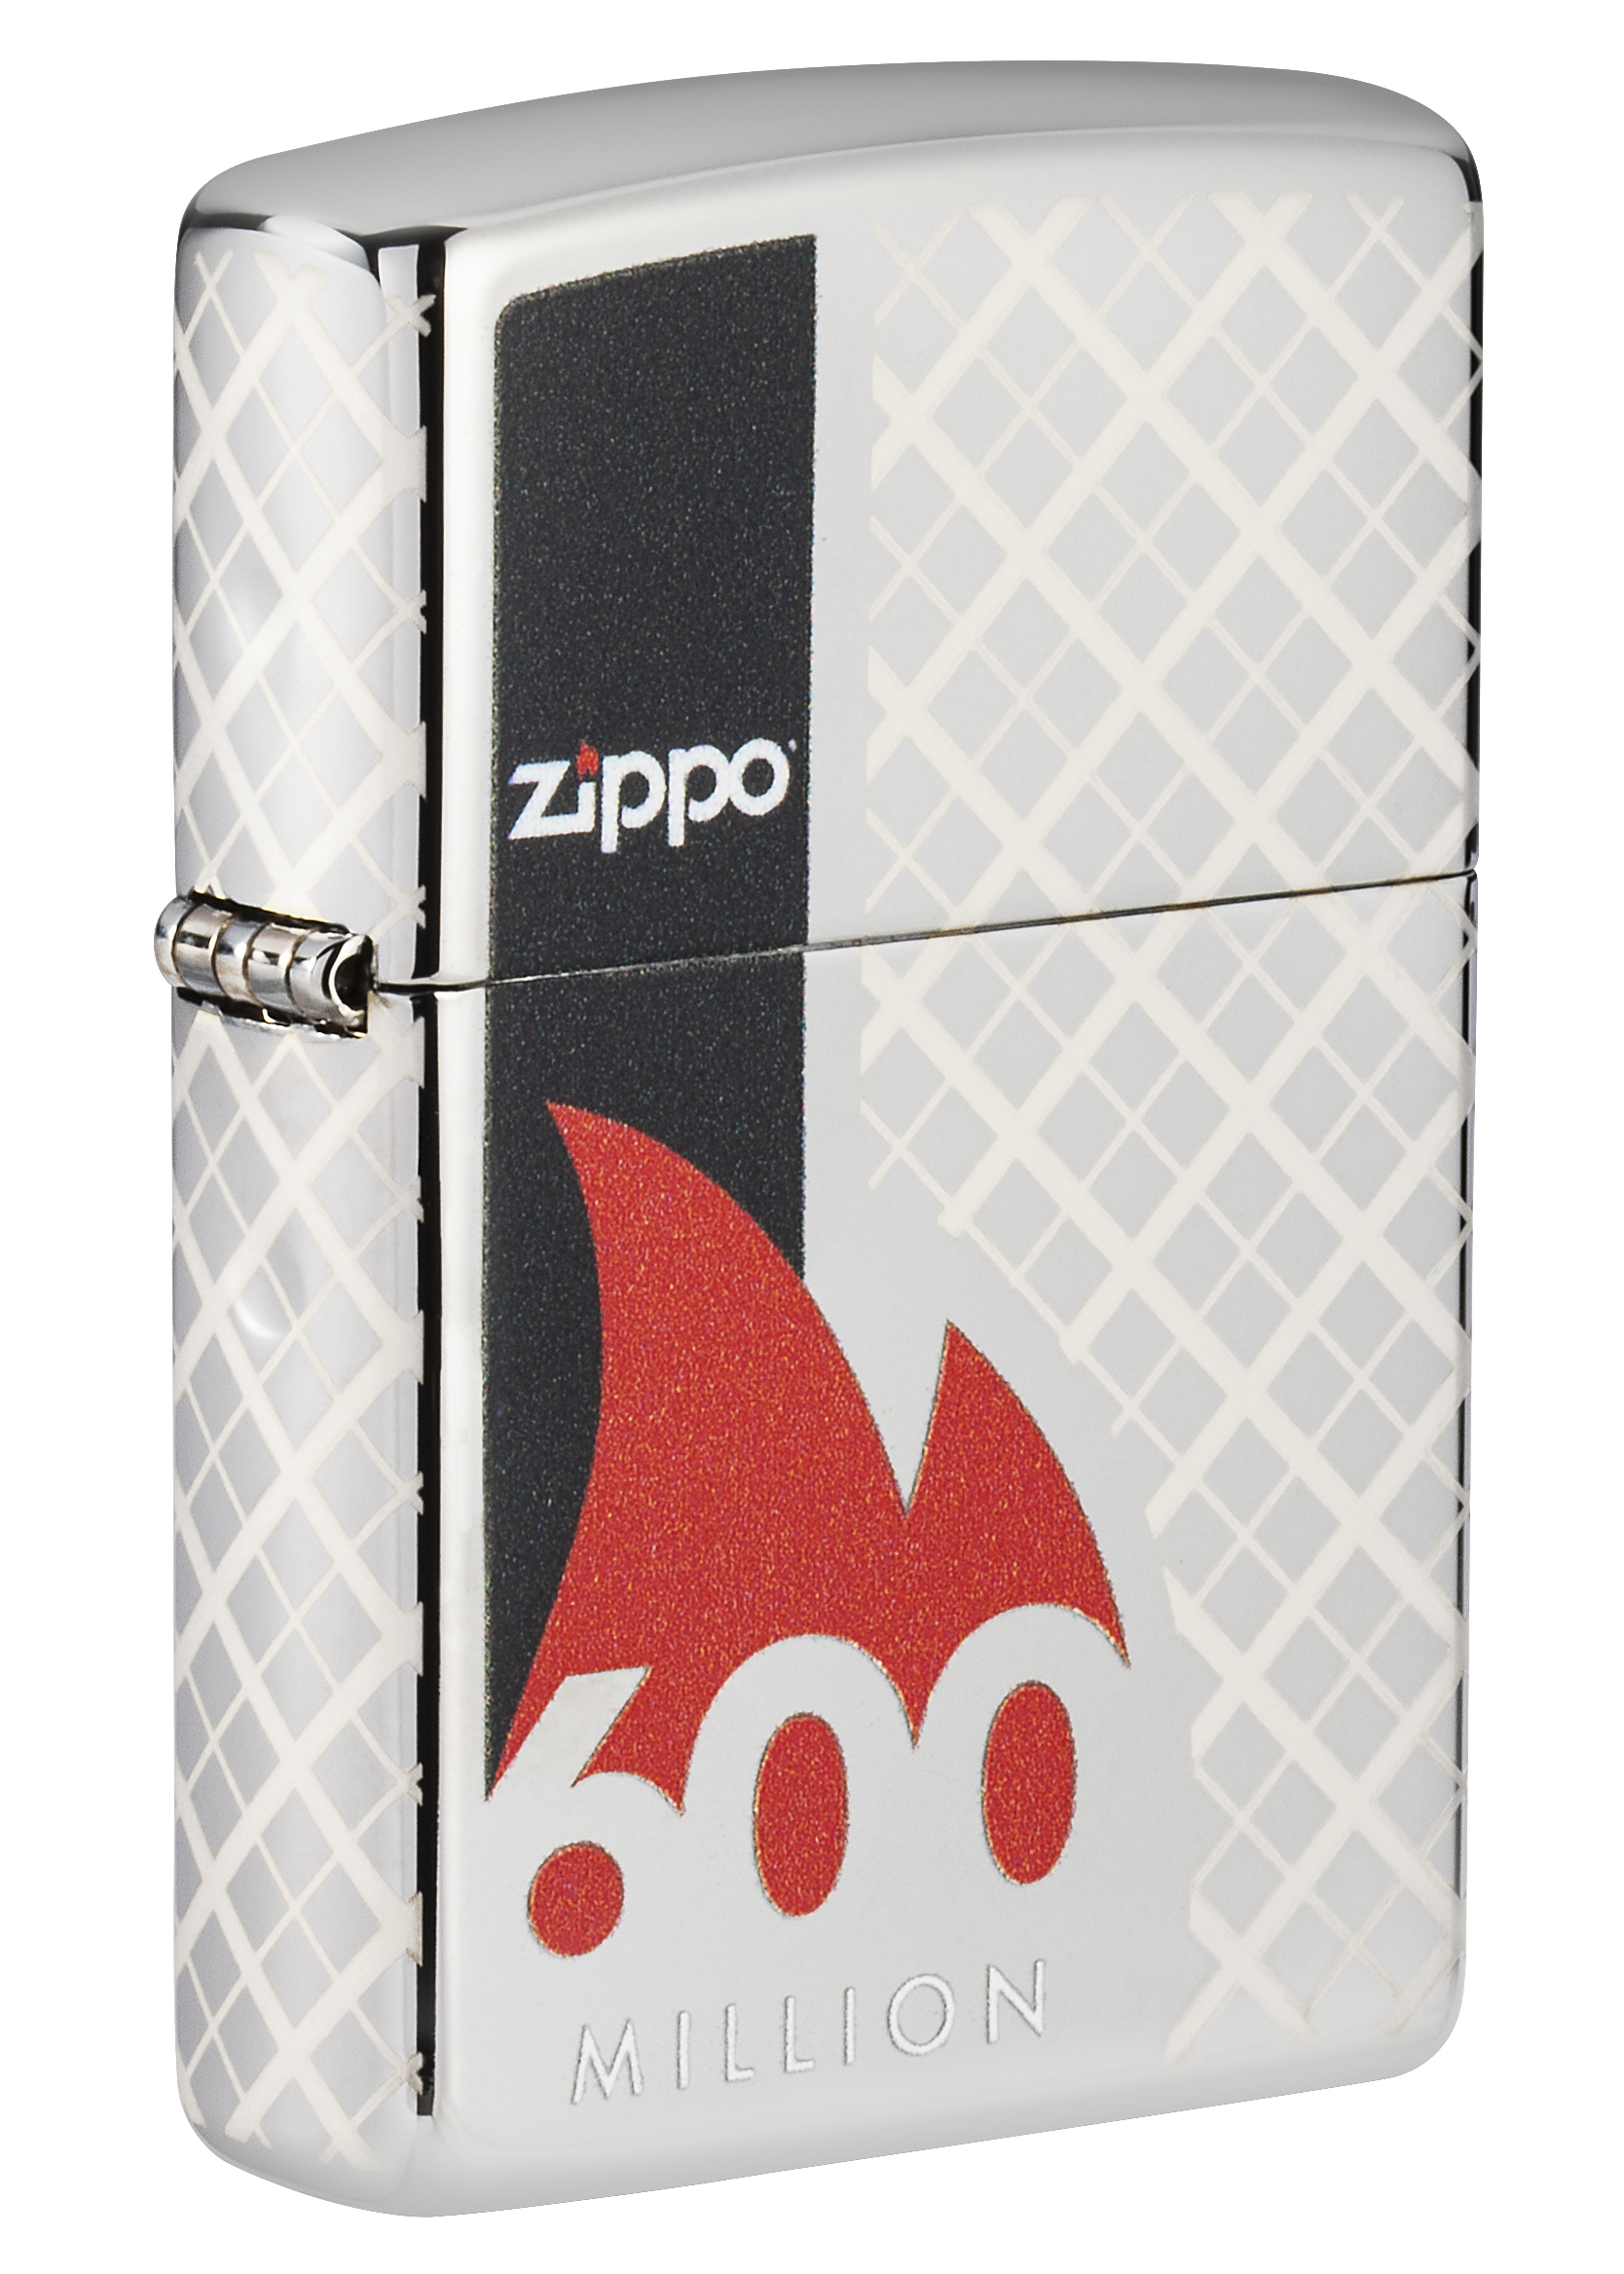 Zippo、永遠に炎を灯し続ける｜Zippo Manufacturing Companyのプレス ...